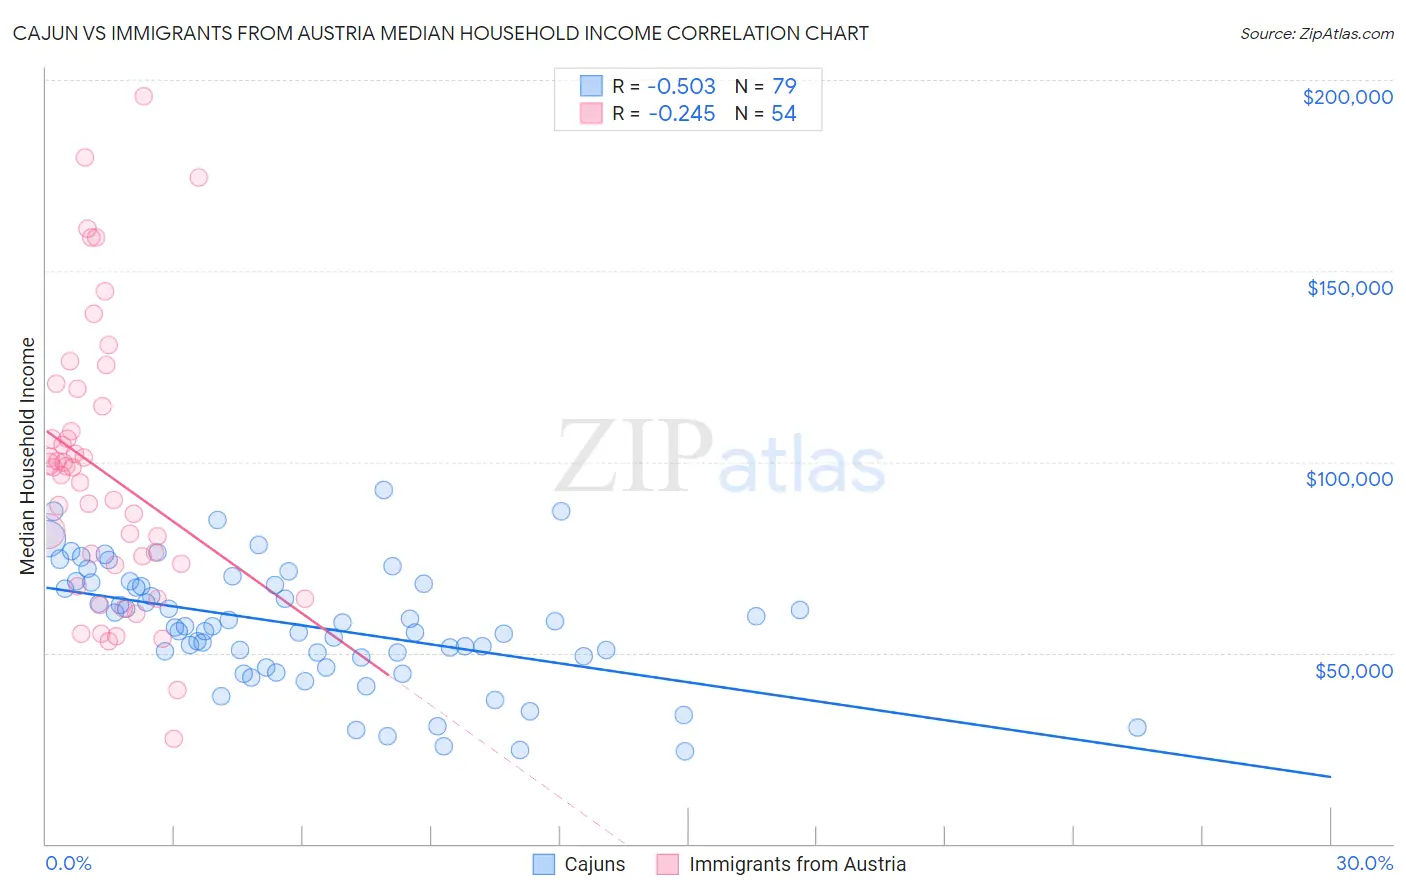 Cajun vs Immigrants from Austria Median Household Income